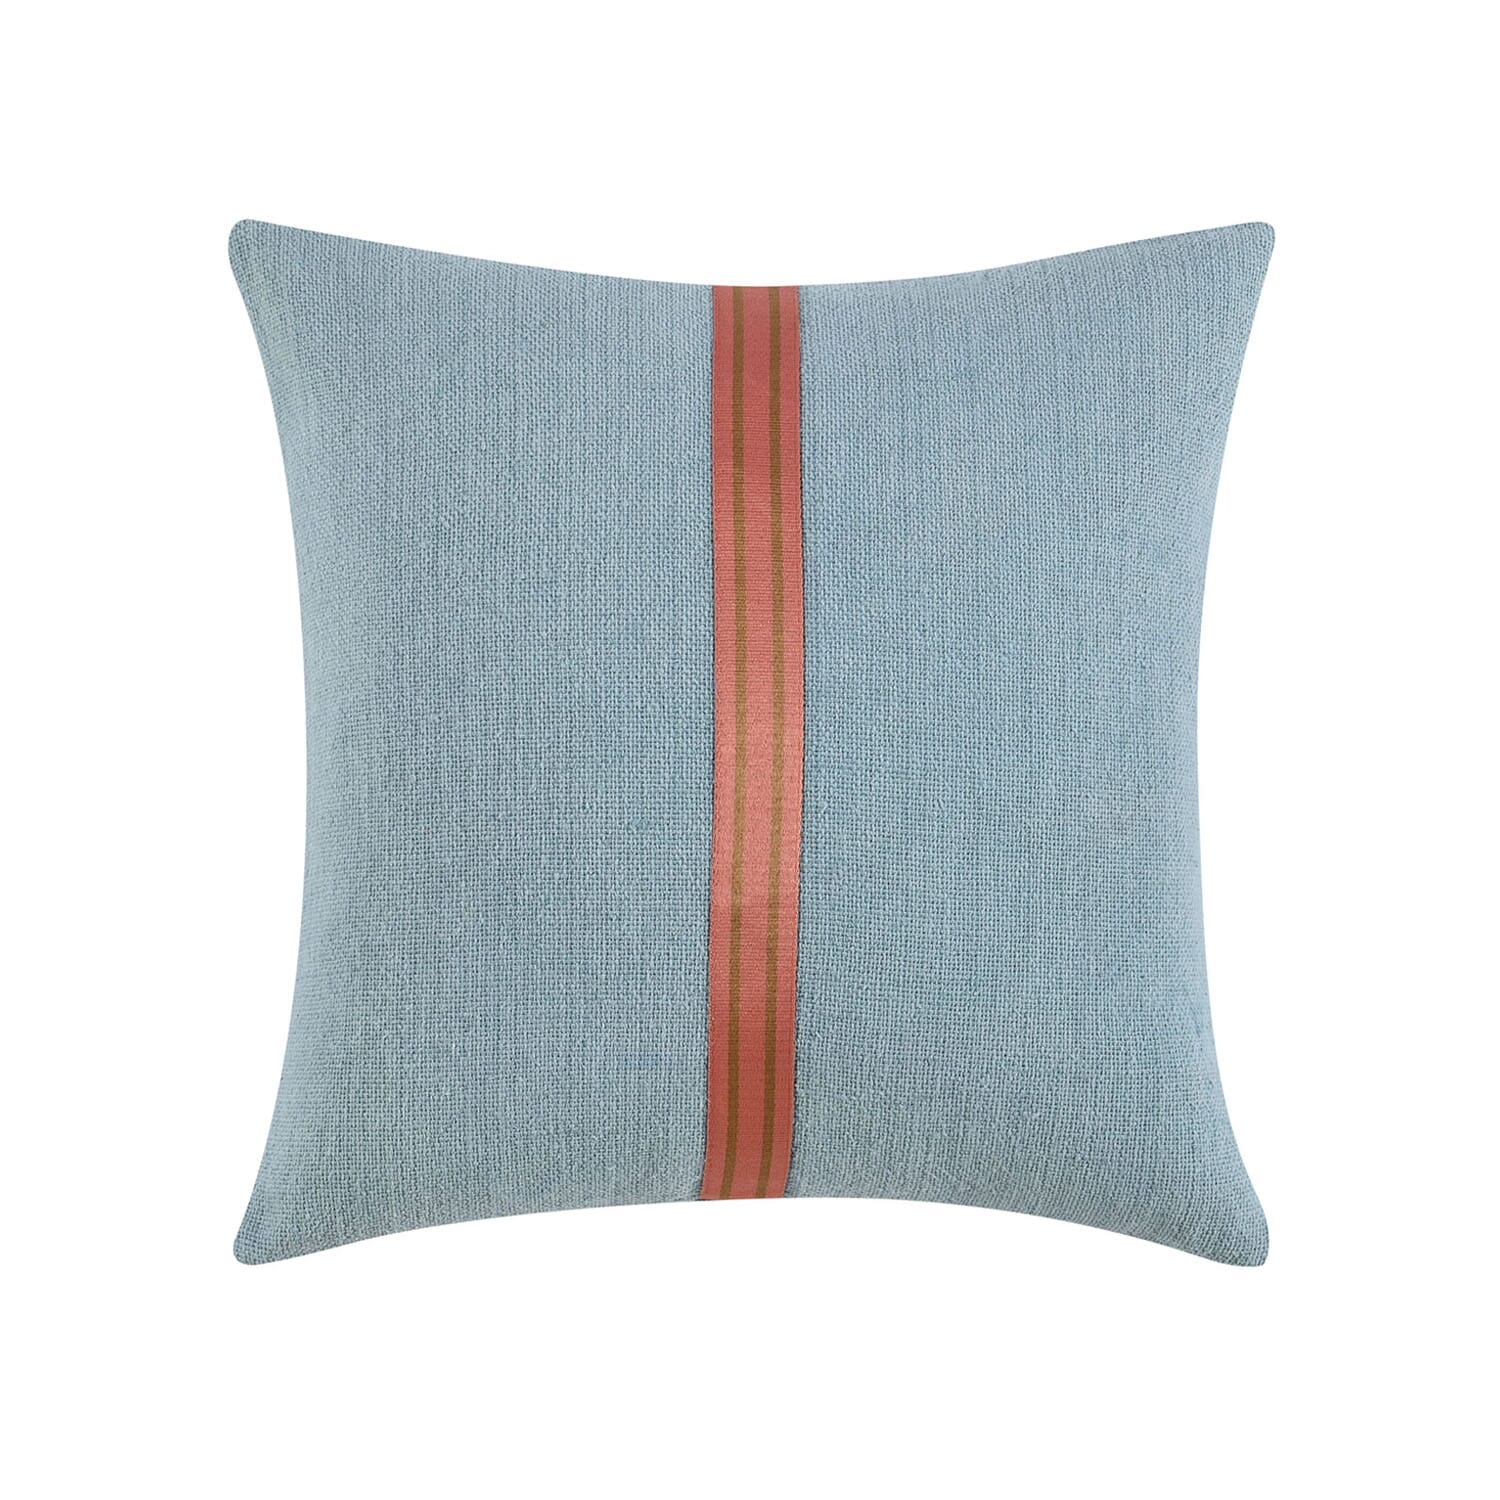 22x22 Breton Blue Multi-Colored Pillow